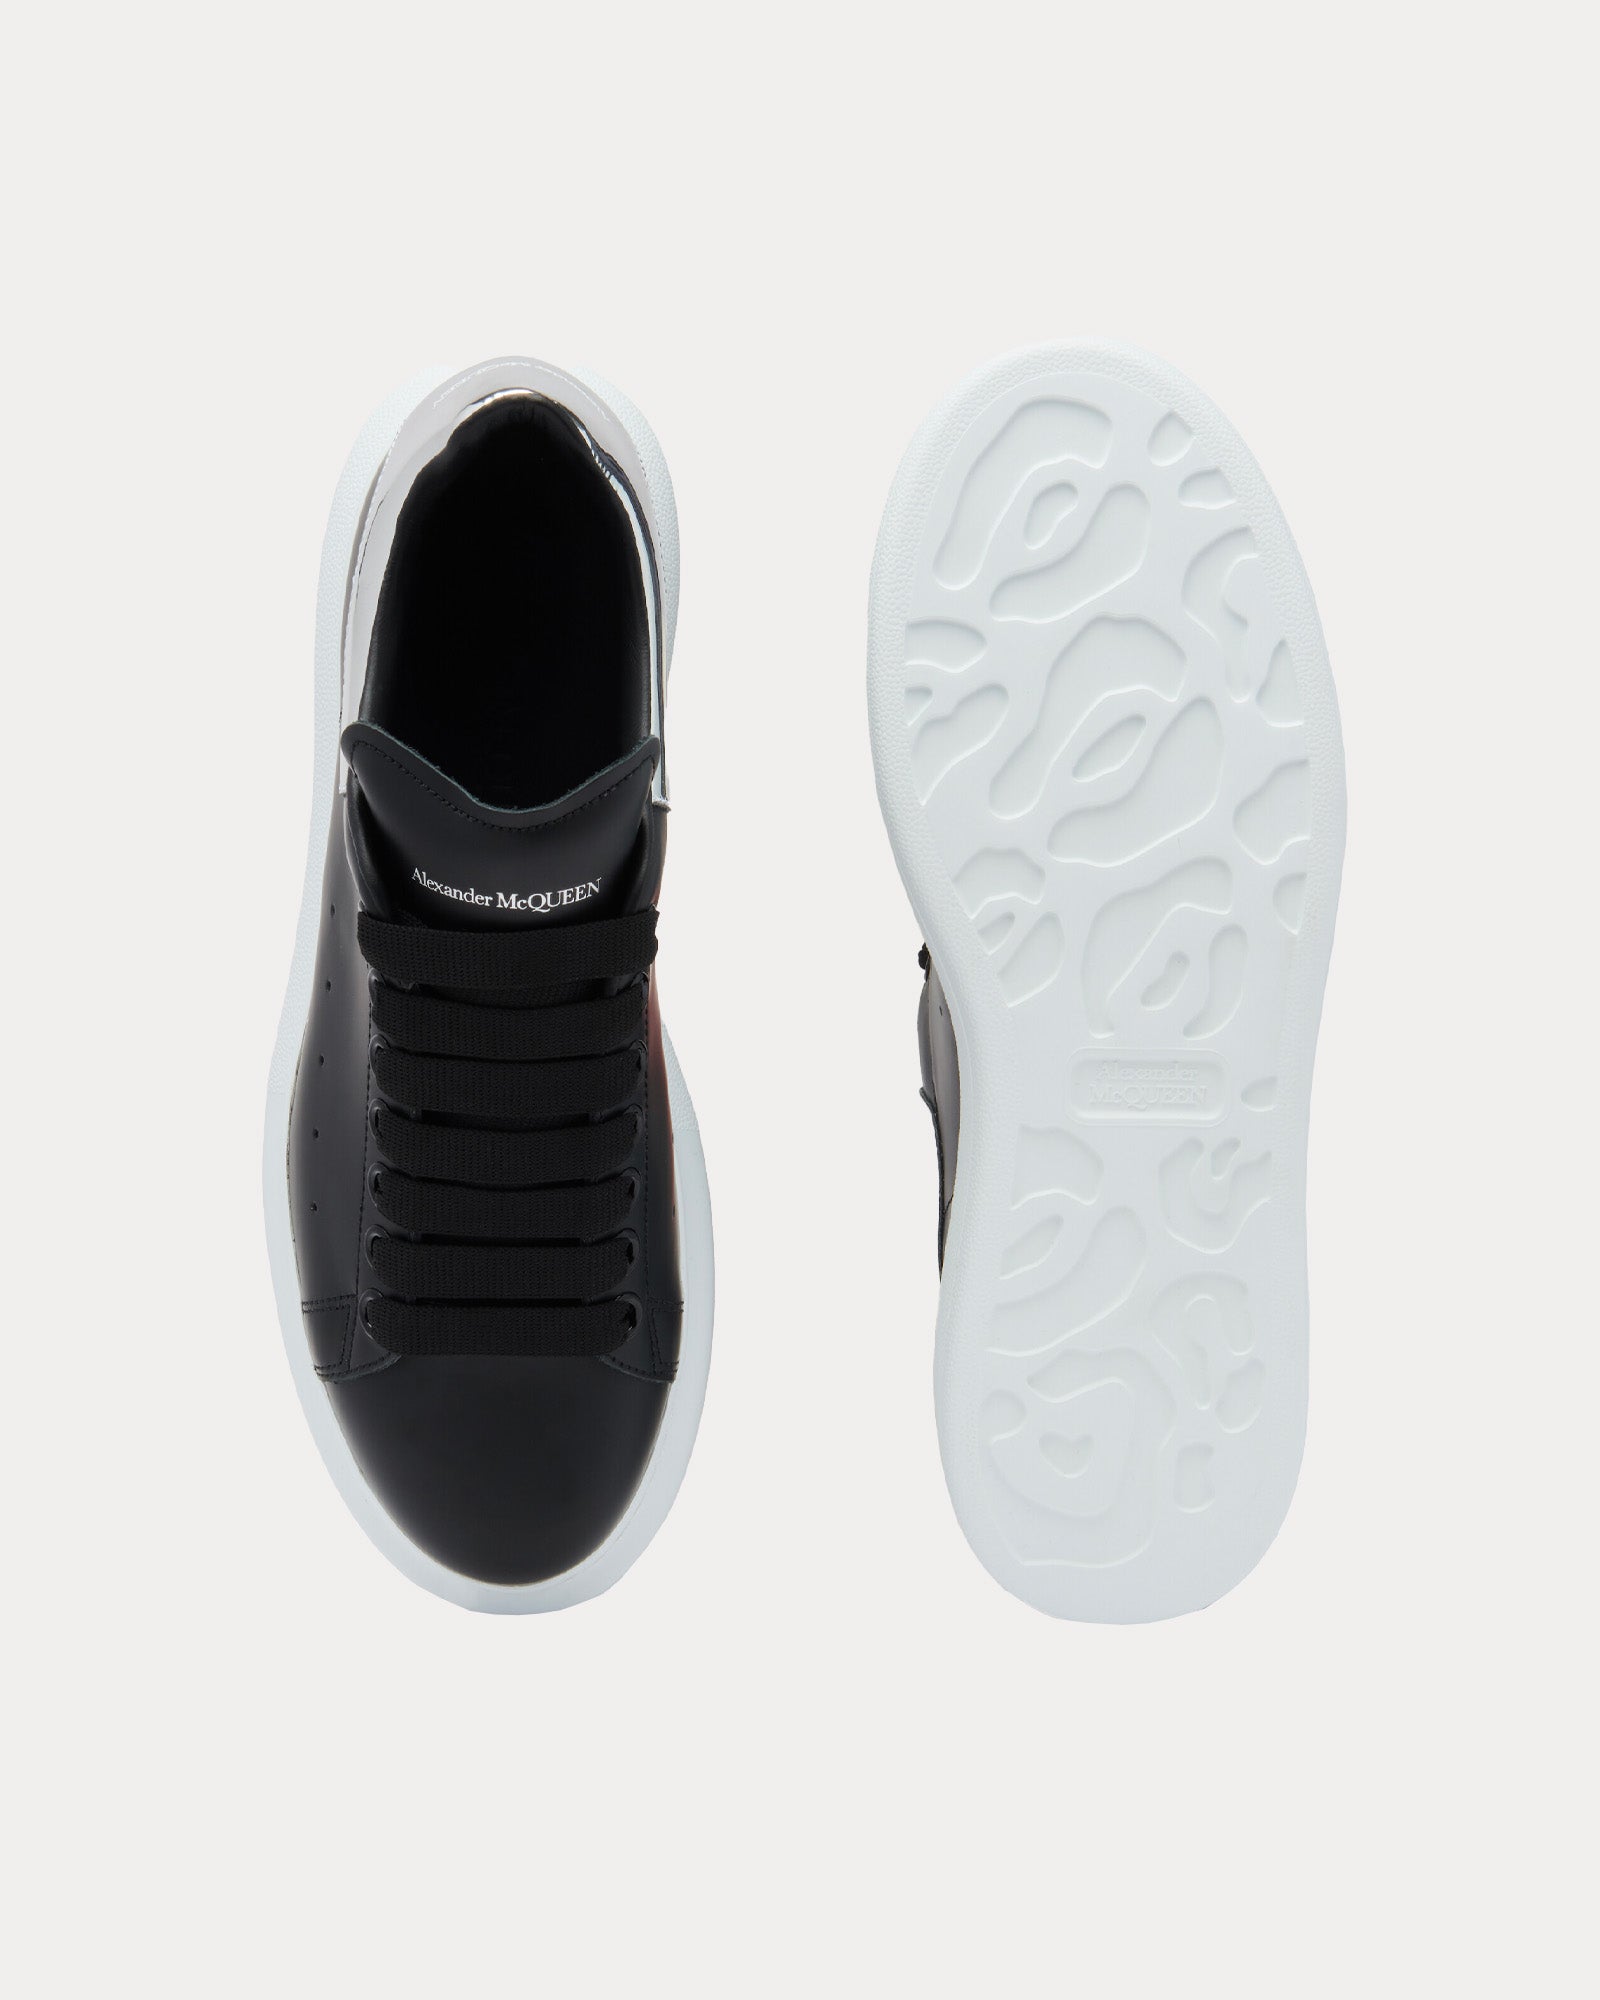 Alexander McQueen - Oversized Leather Black / Silver Low Top Sneakers